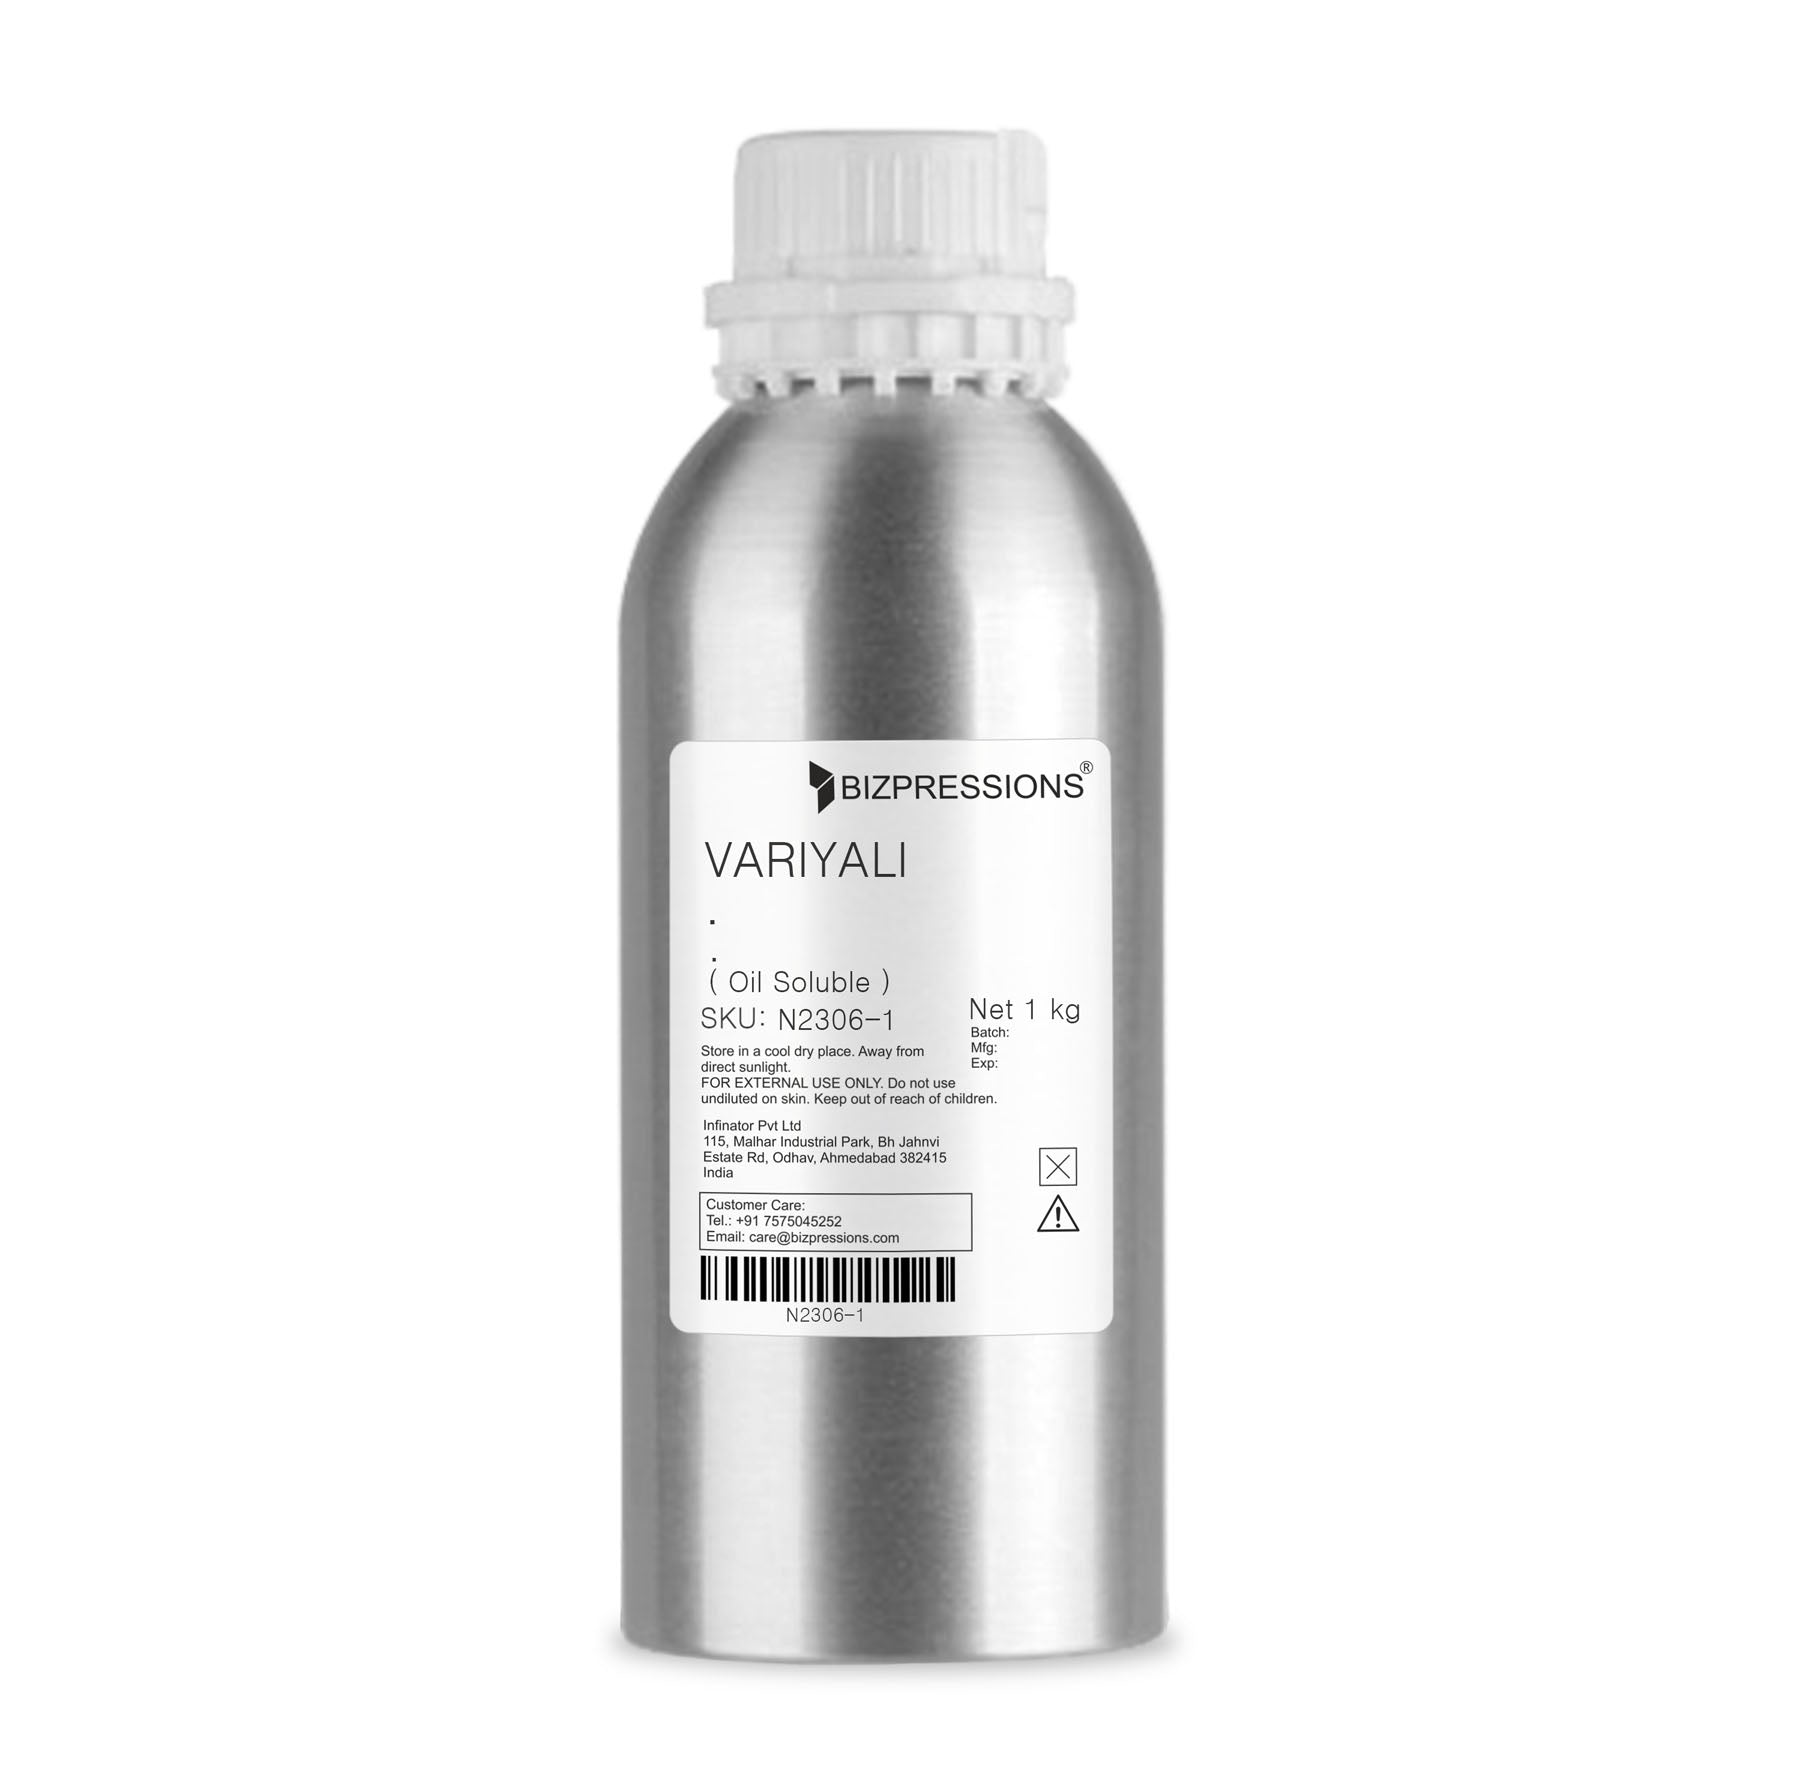 VARIYALI - Fragrance ( Oil Soluble ) - 1 kg